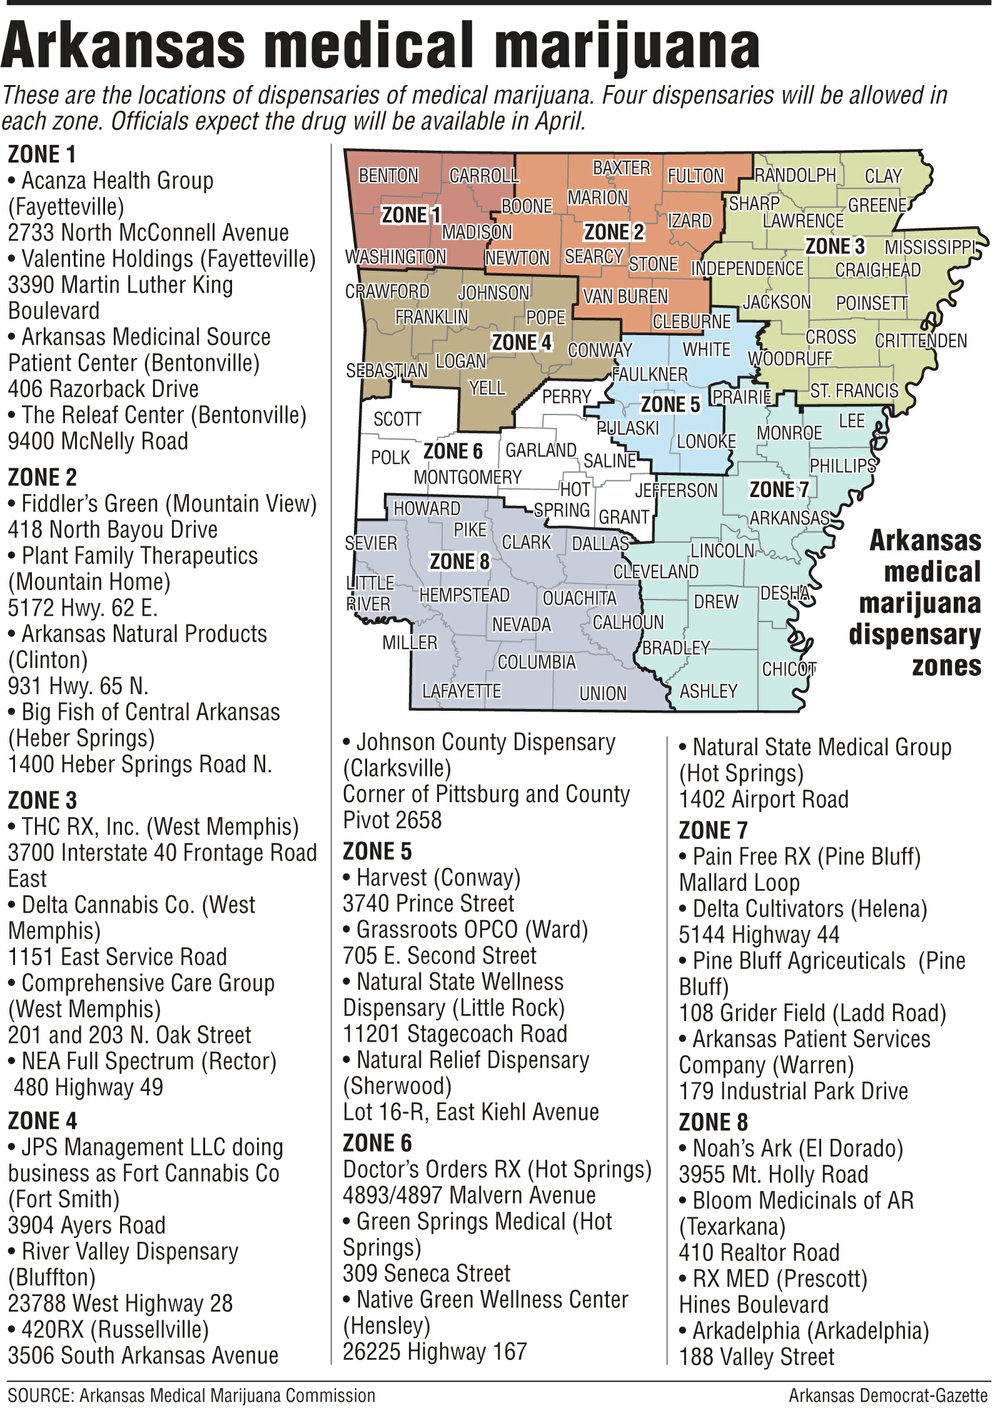 Arkansas medical marijuana information and map